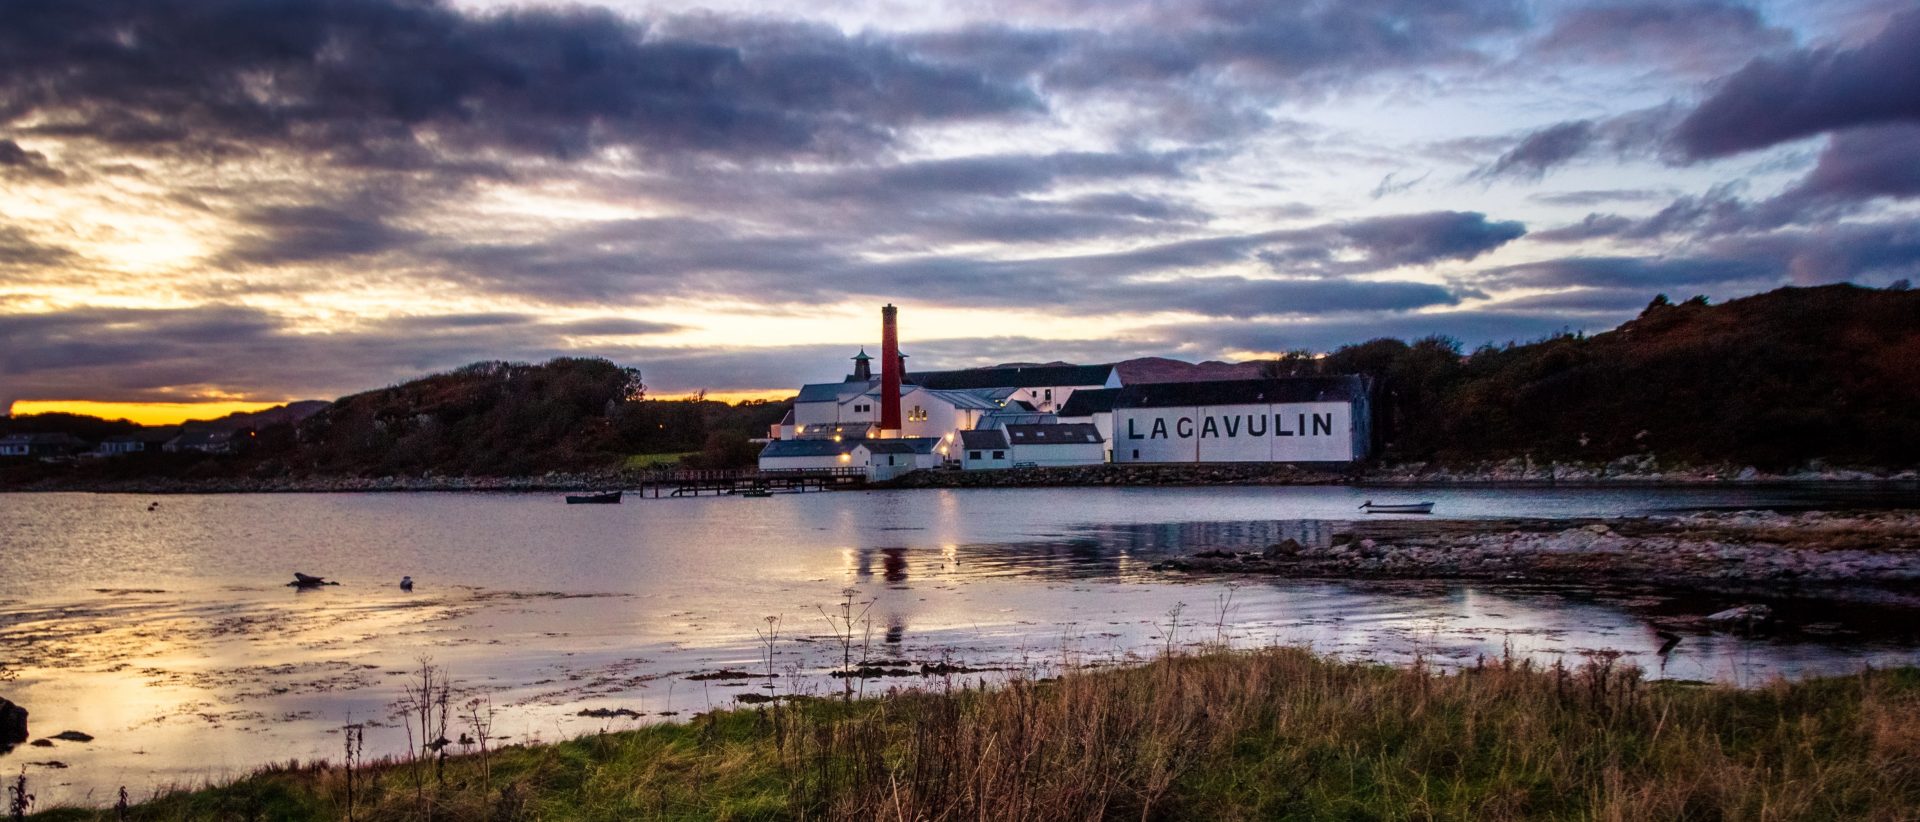 Lagavulin, Scotland